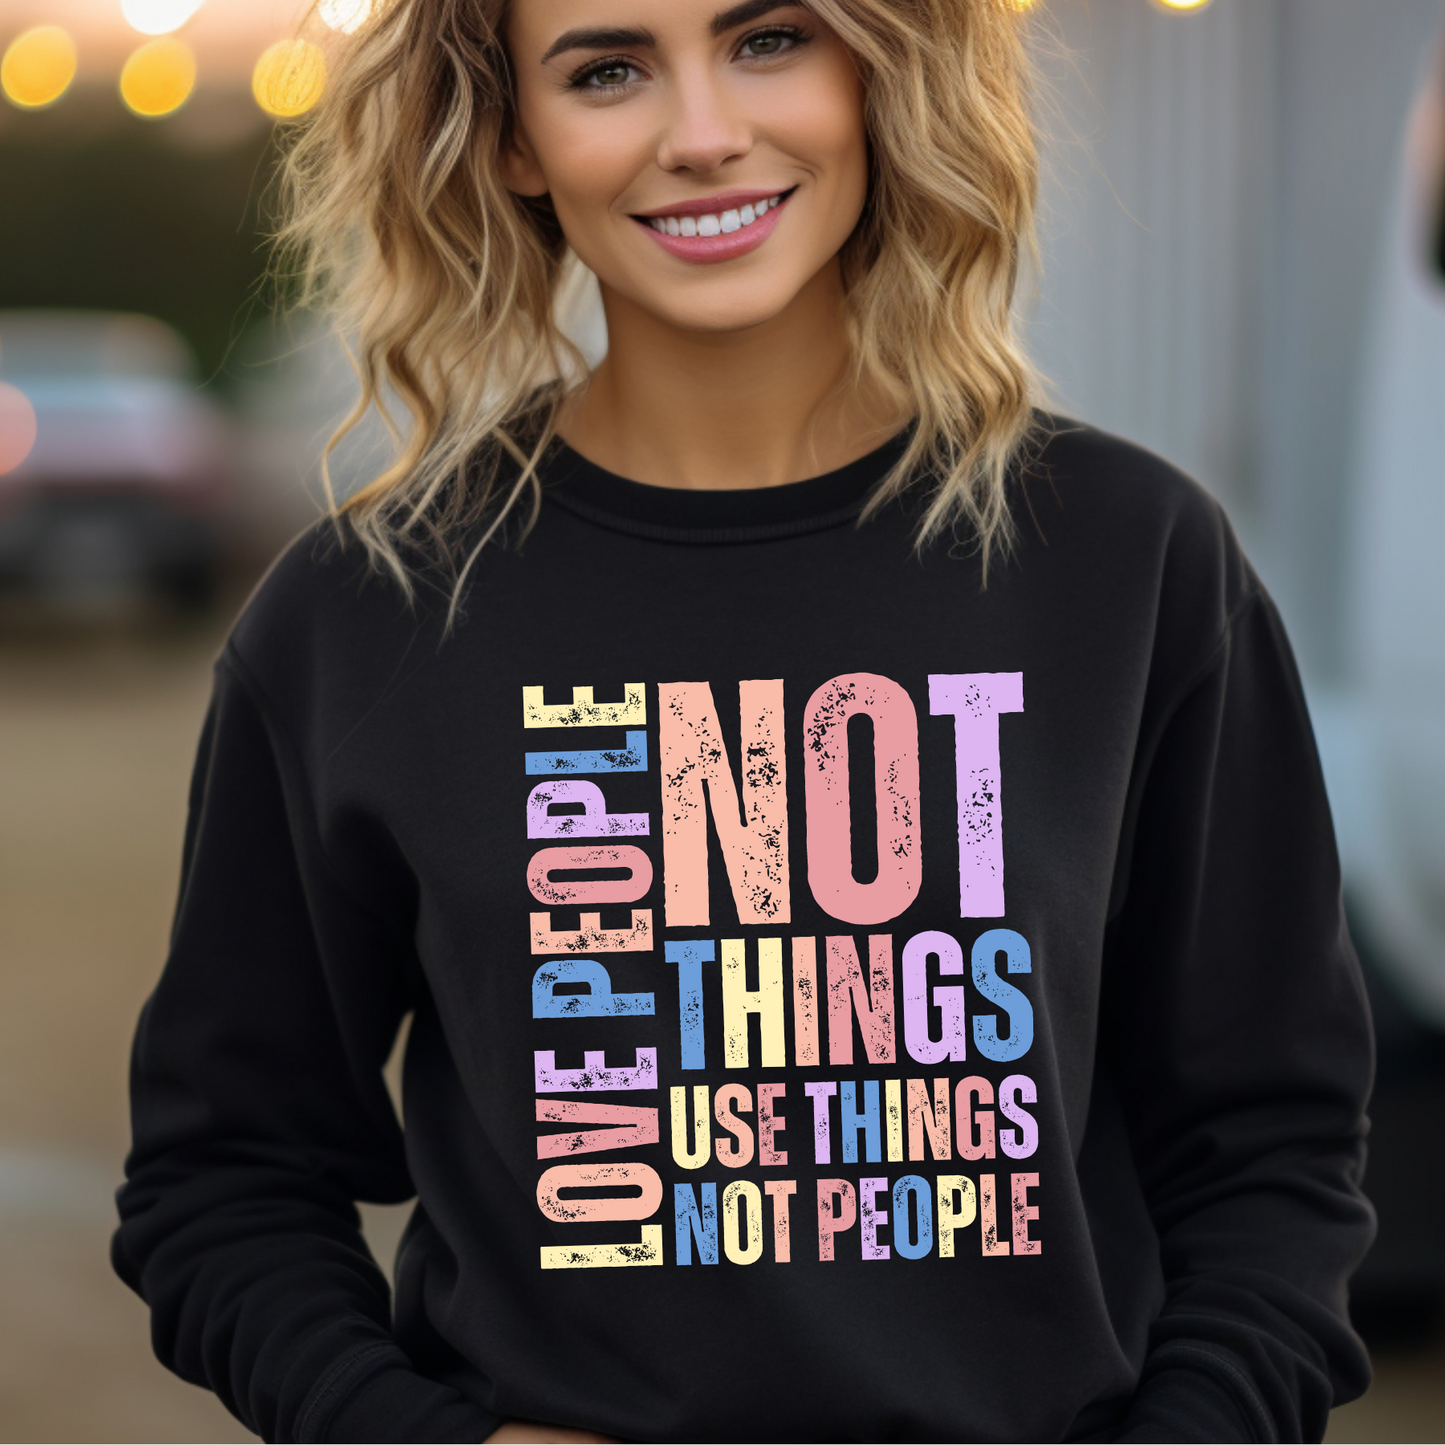 love people not things use things not people